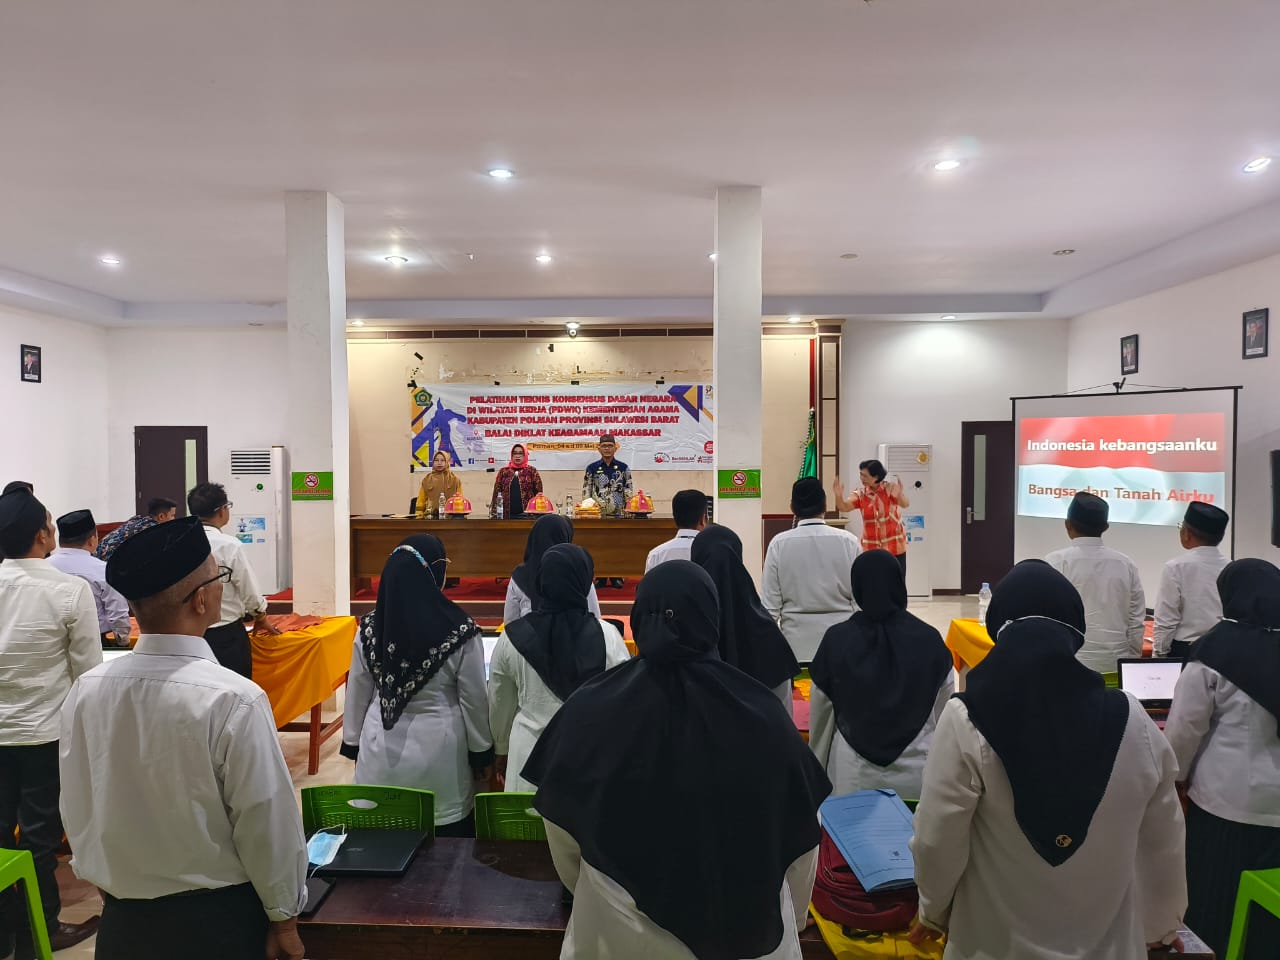 Pelatihan di Wilayah Kerja (PDWK) Konsensus Dasar Negara di Kabupaten Polman Sulawesi Barat